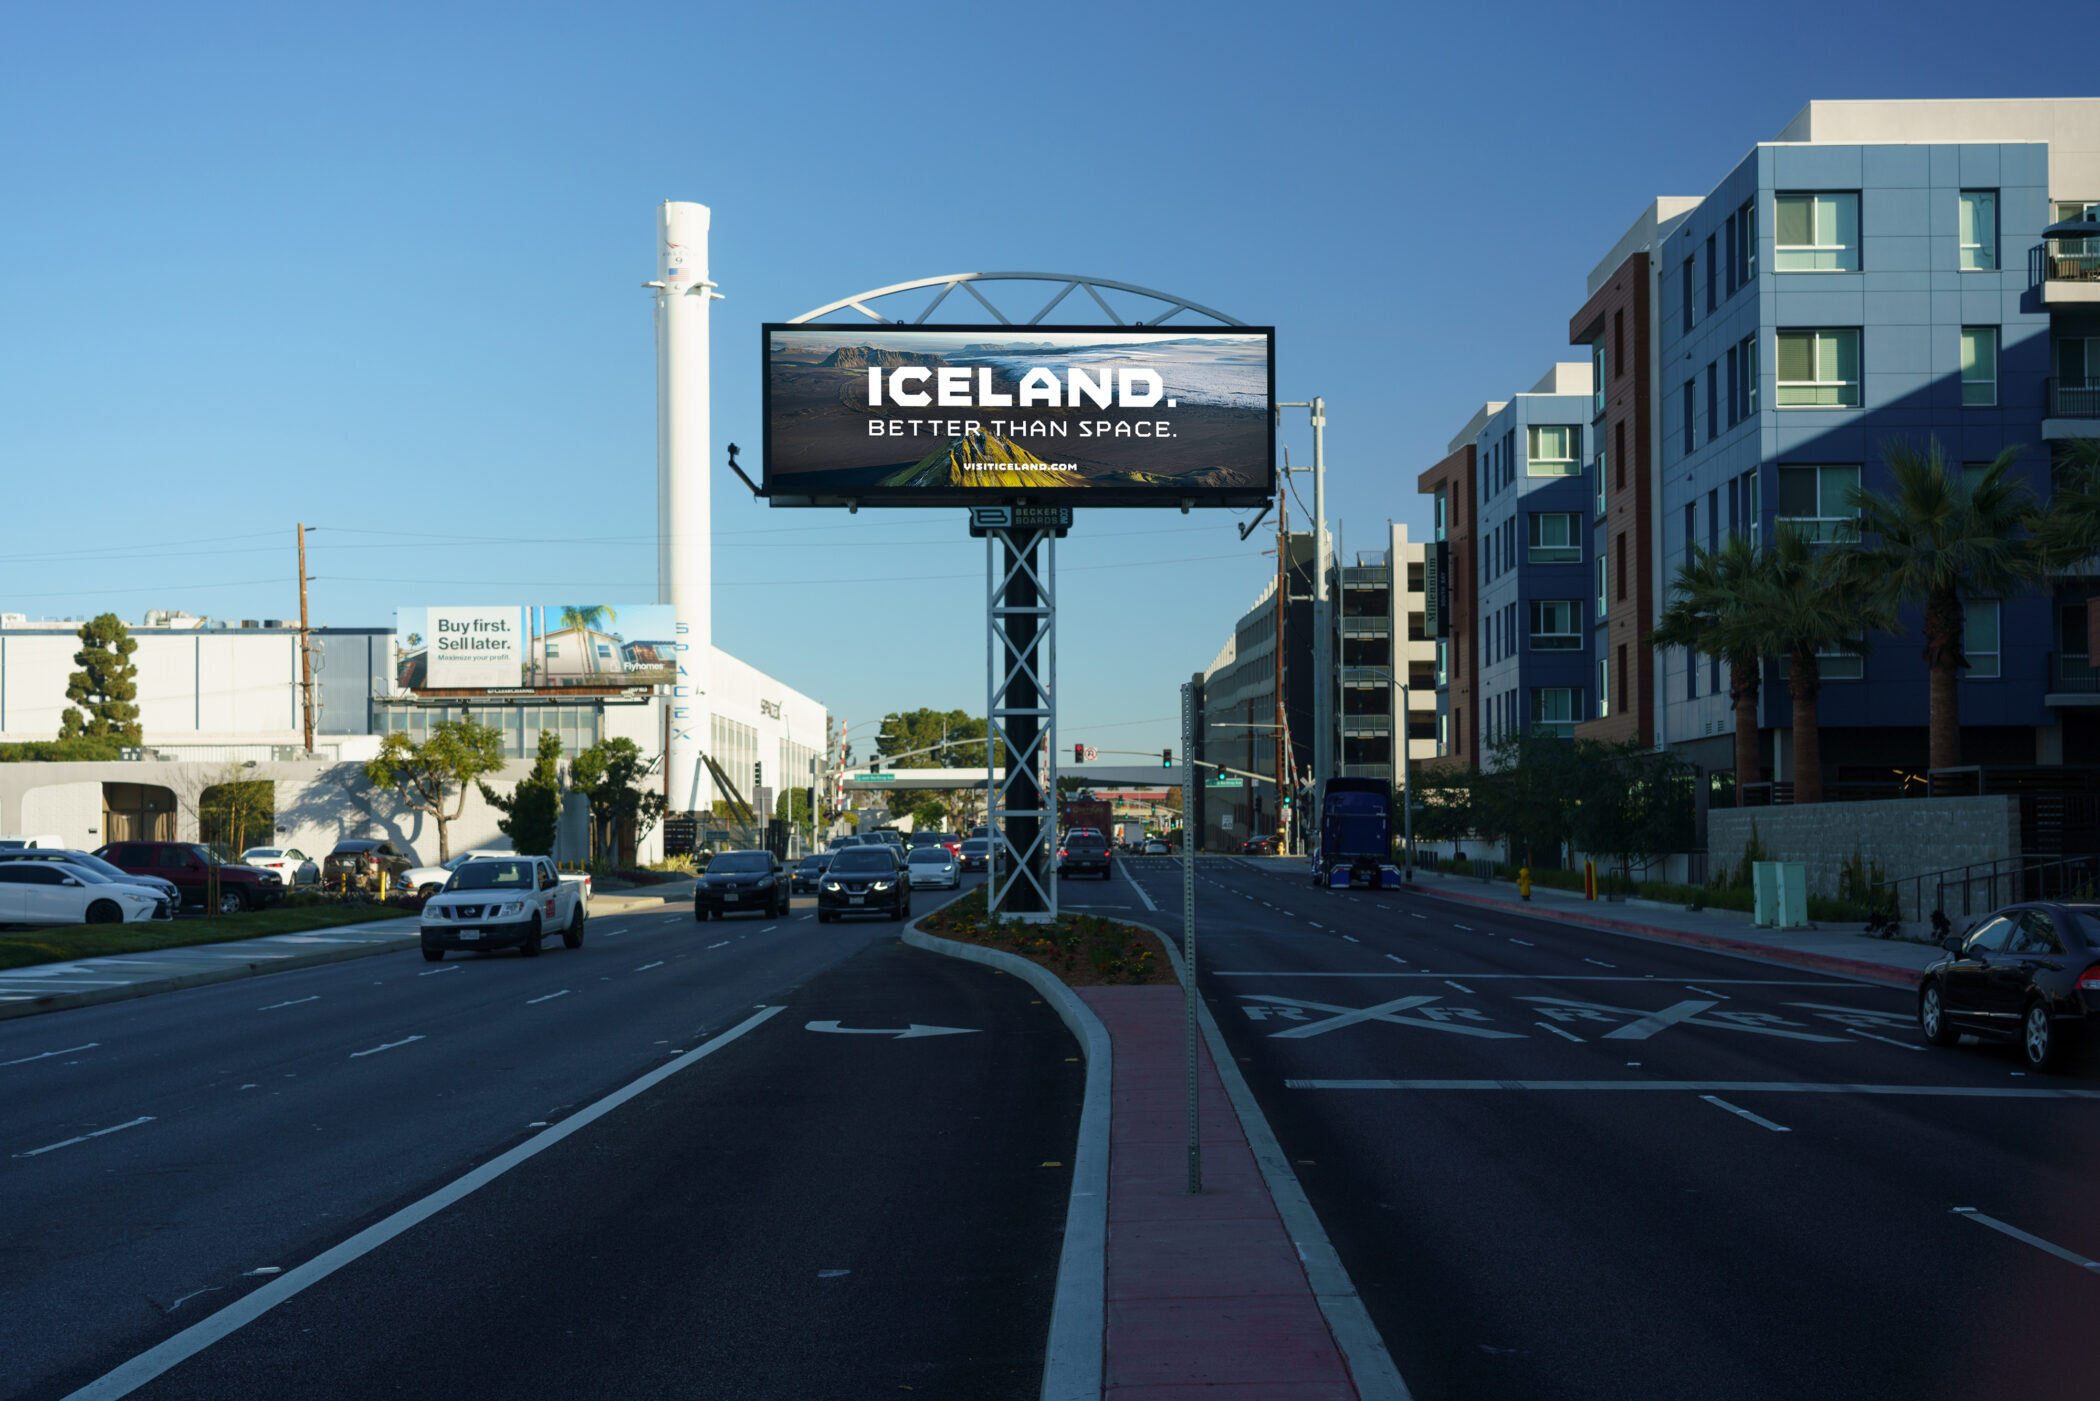 Mission Iceland - Billboard SpaceX